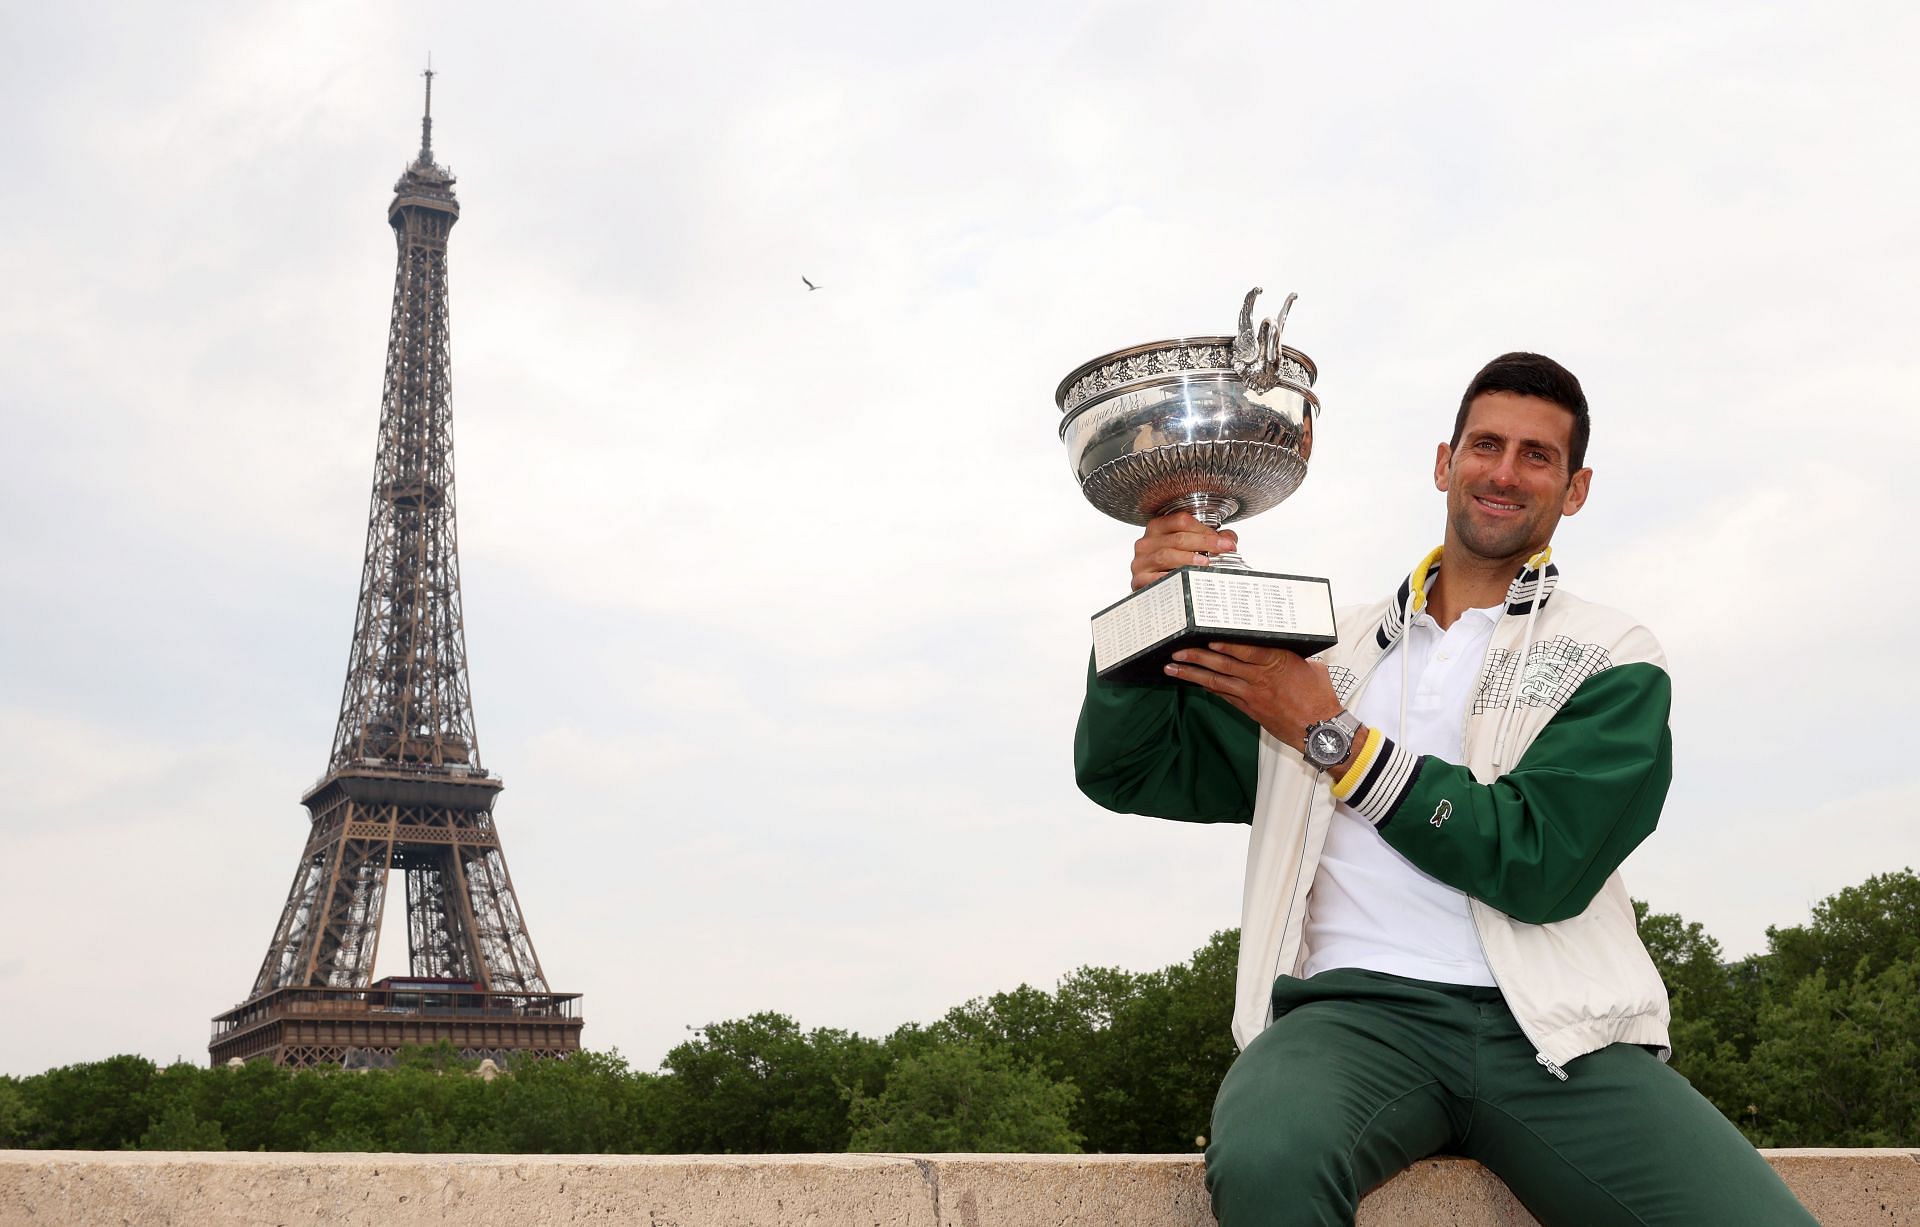 Novak Djokovic at the 2023 French Open.